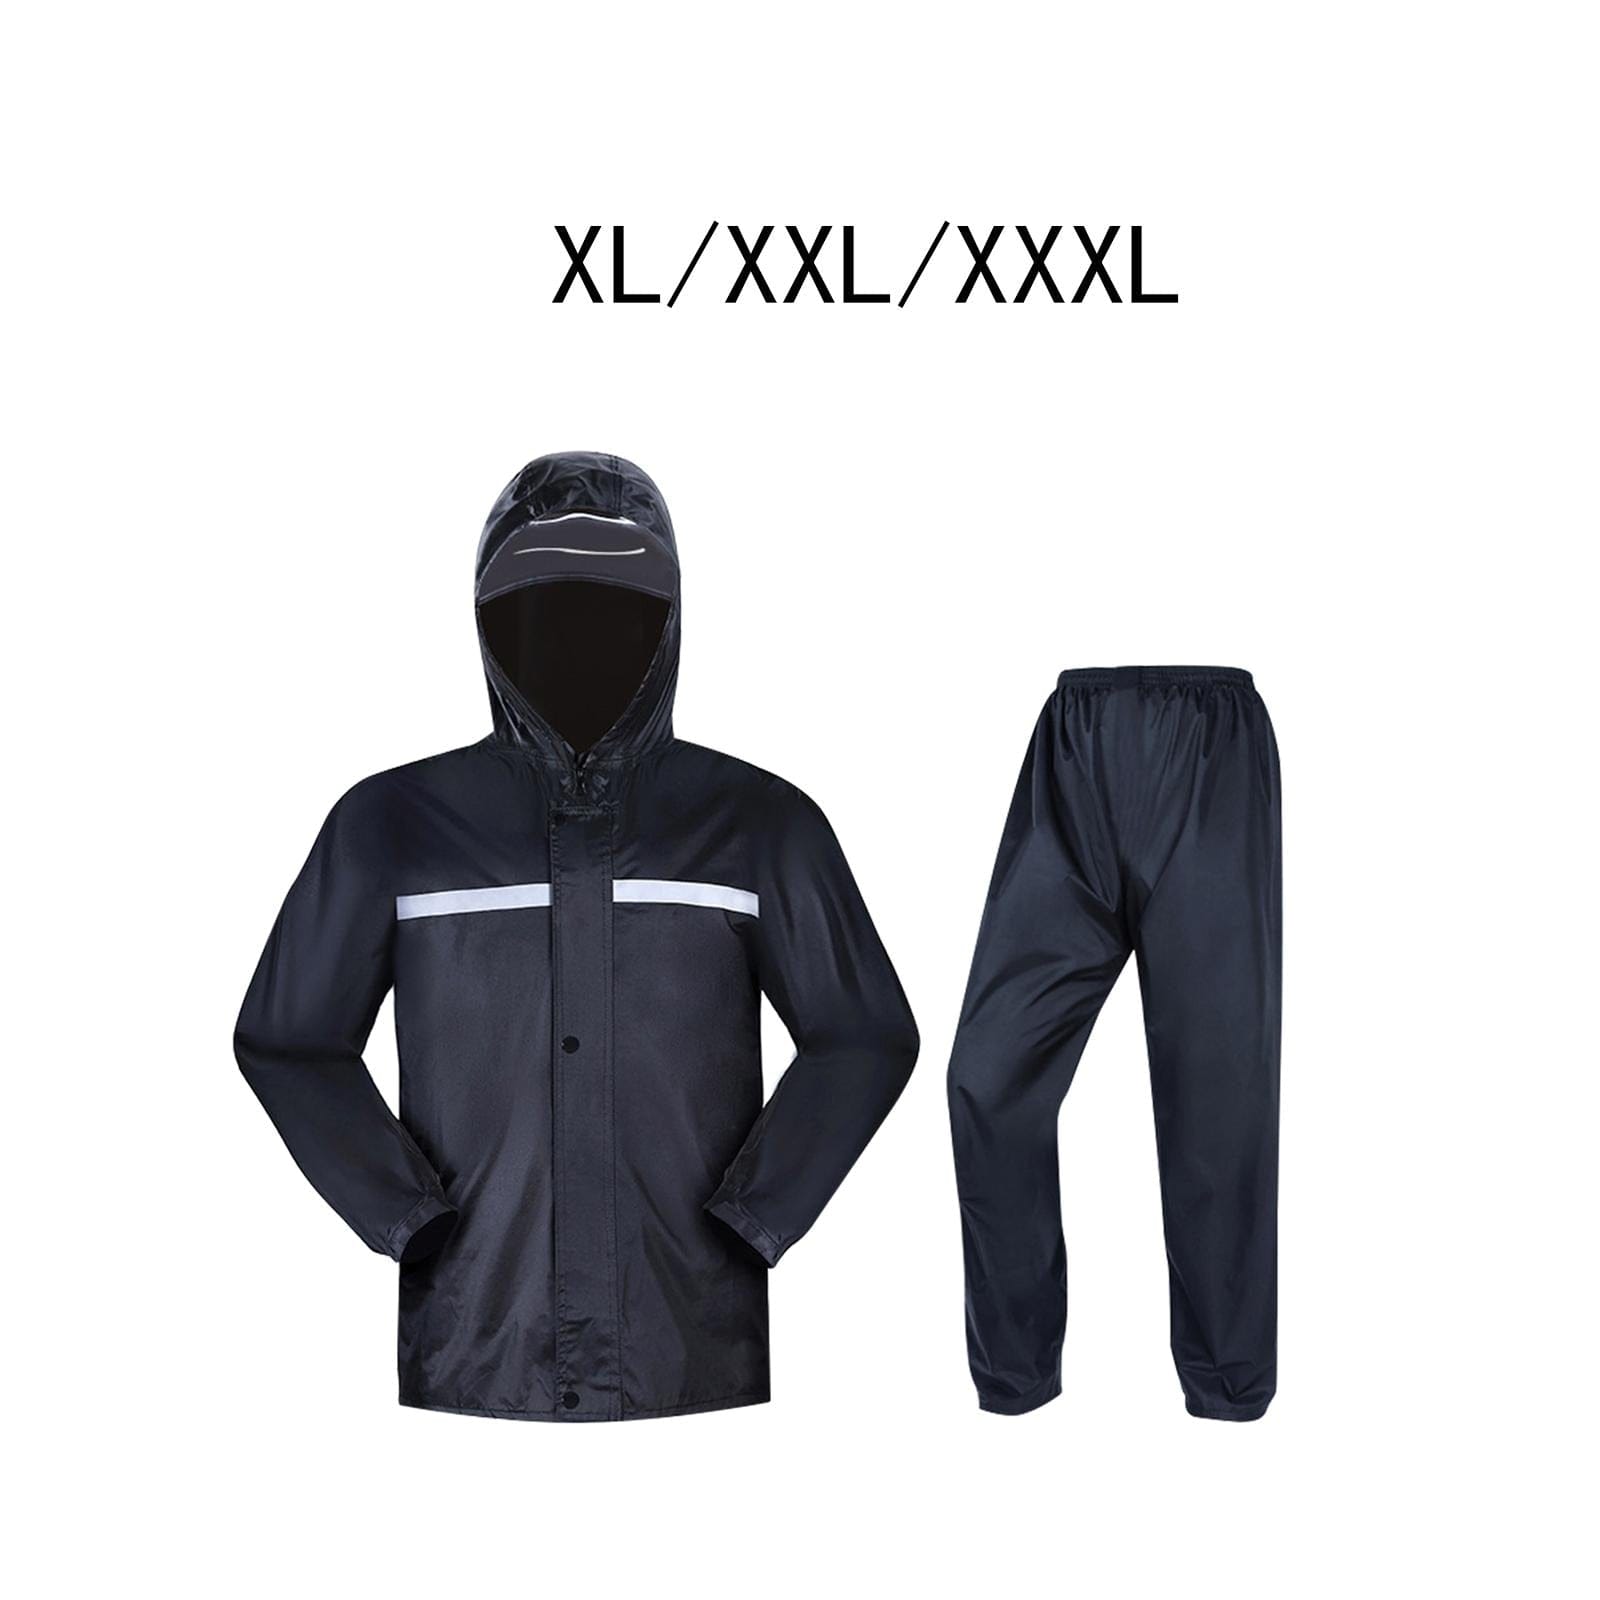 MIERSPORT Rain Suit Waterproof Jacket Breathable Rain Coat Pants Adult